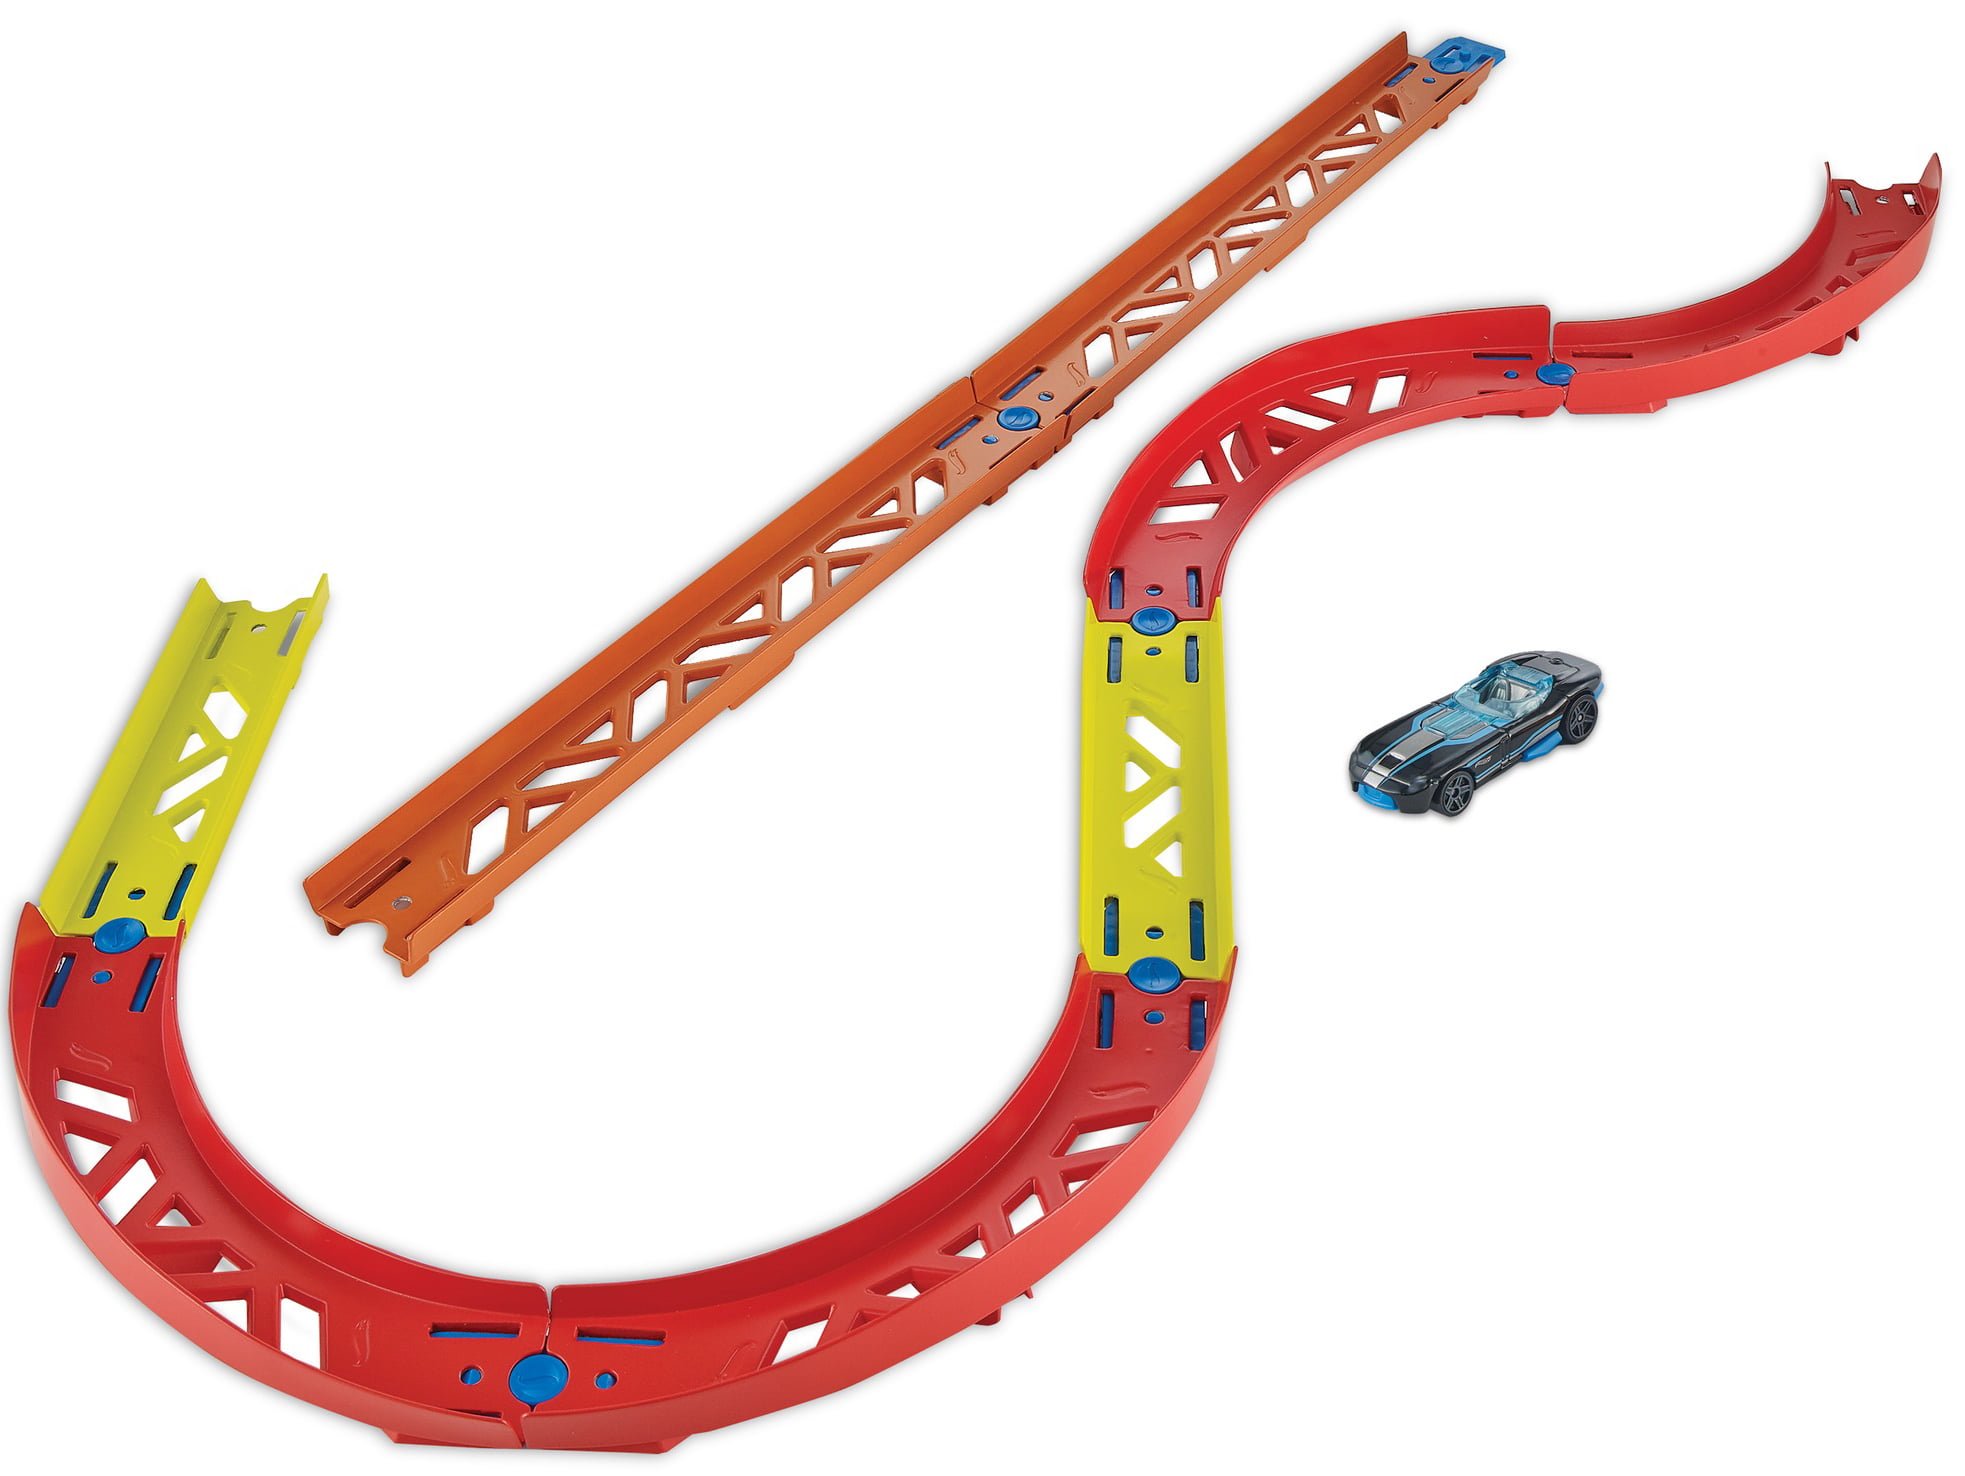 Hot Wheels Track Builder Kit Kids Play Set Straight Track Car Boys Toy New 